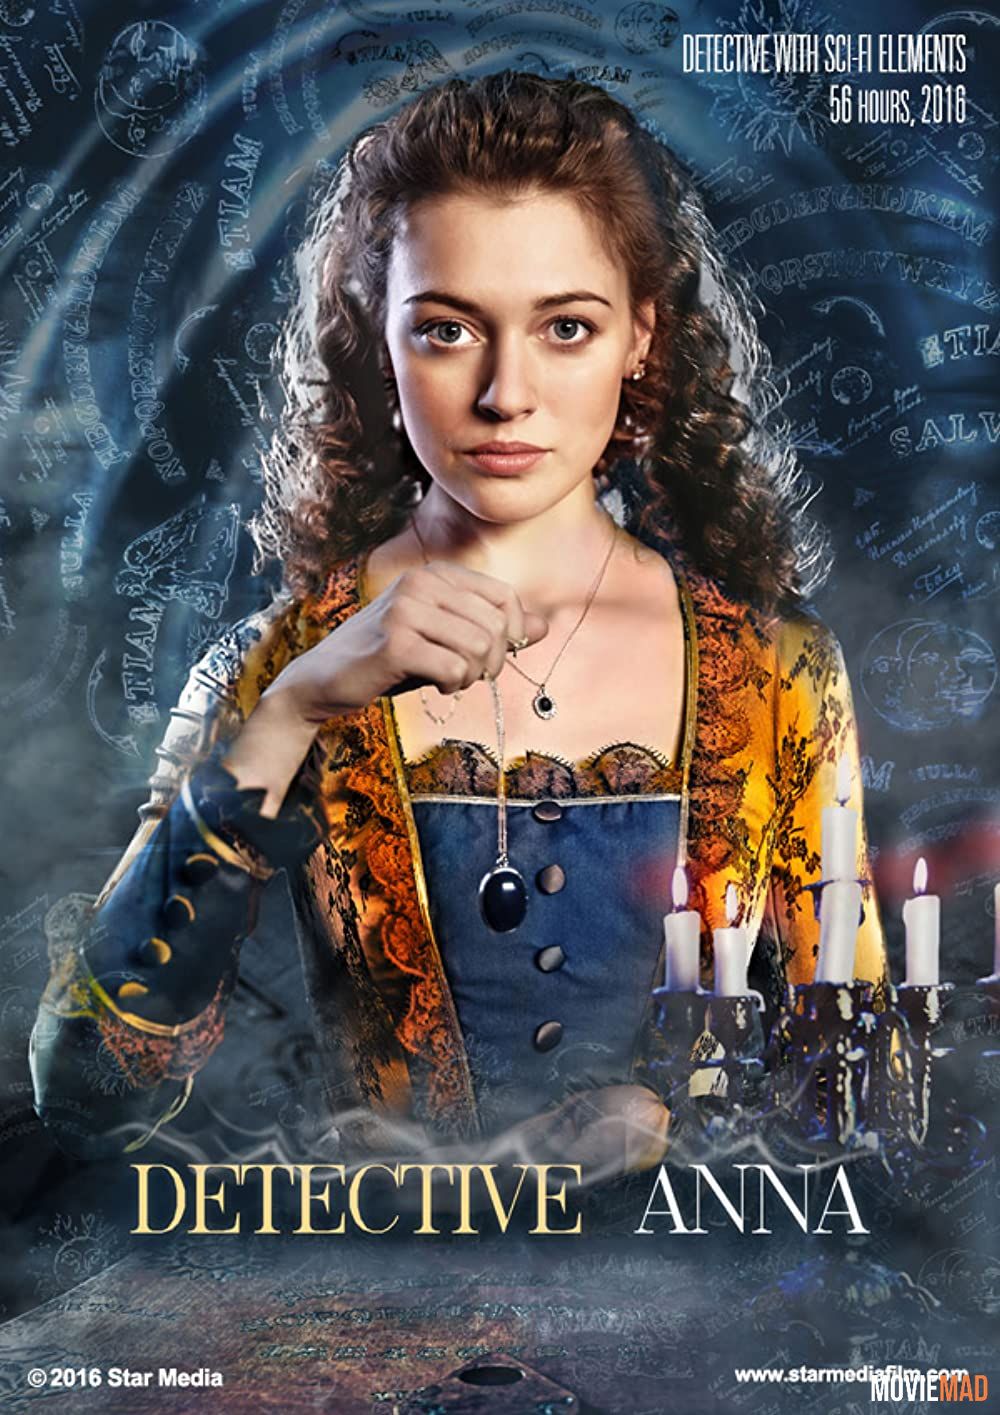 Detective Anna S01 (E25-31) Hindi Dubbed WEB DL Full Series 720p 480p